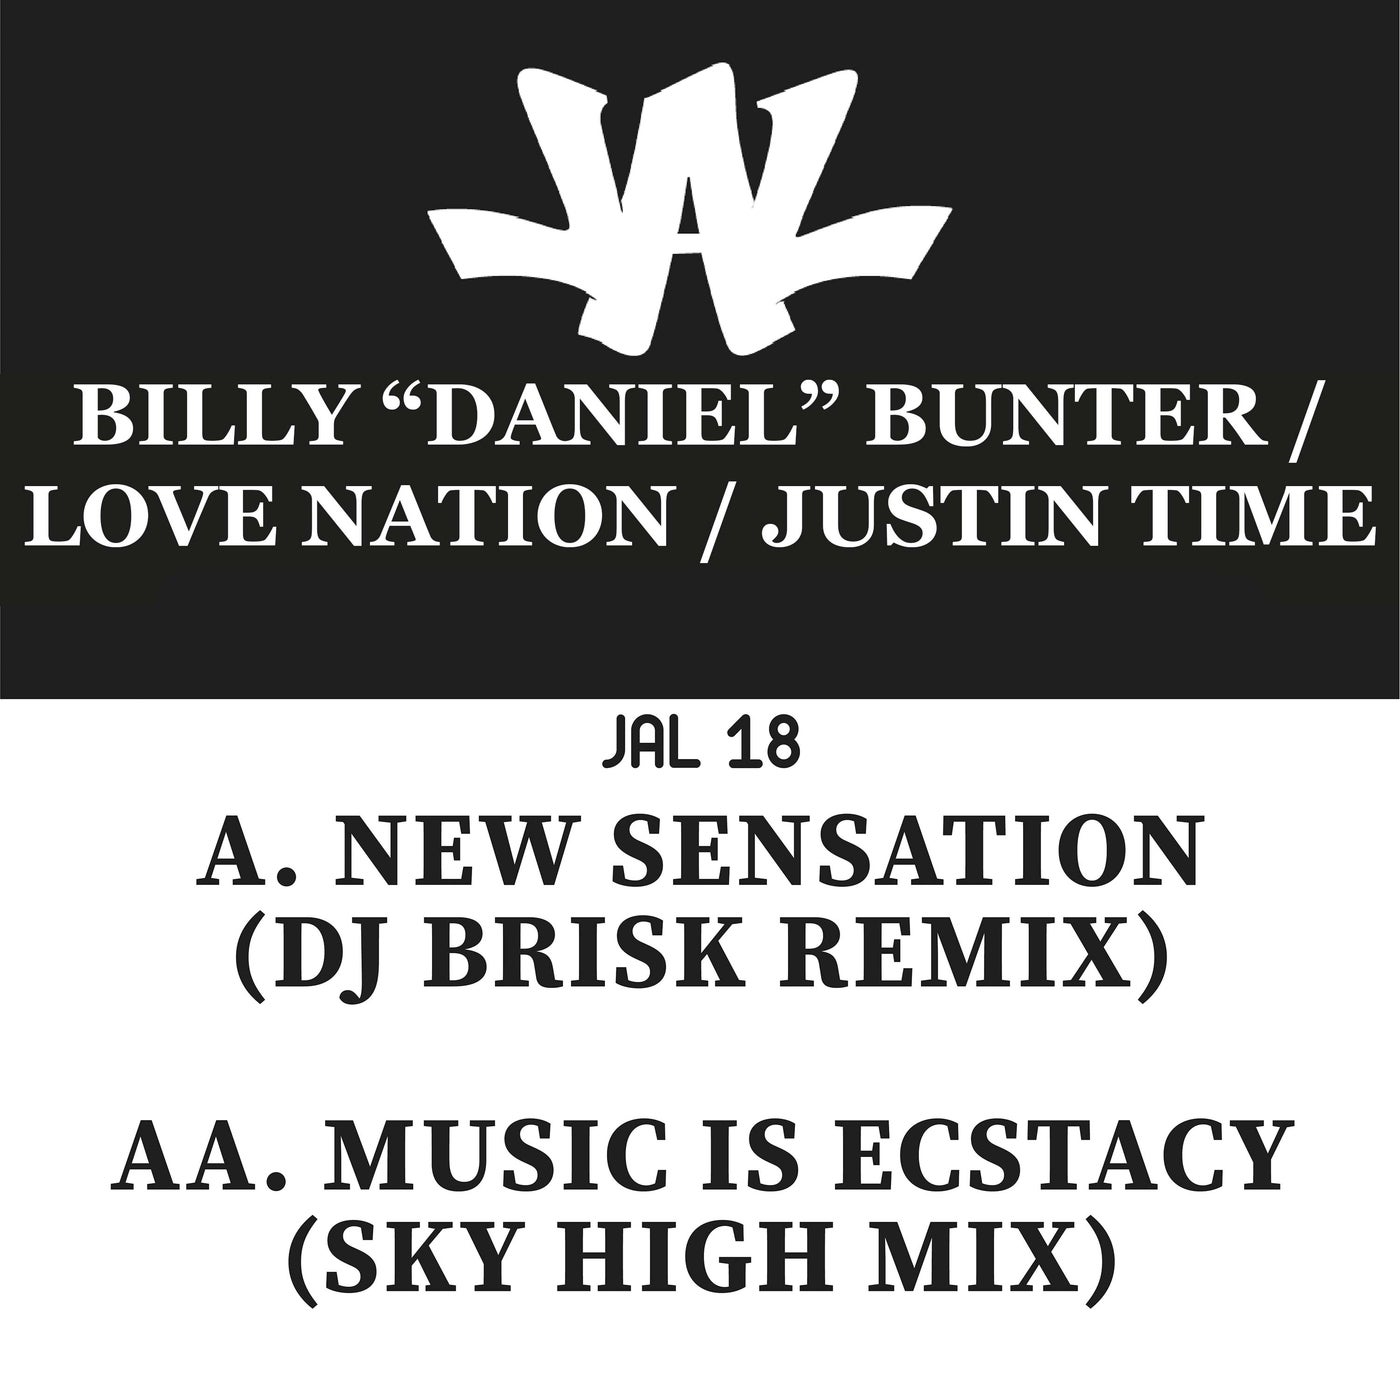 New Sensation / Music is Ecstacy (Remixes)